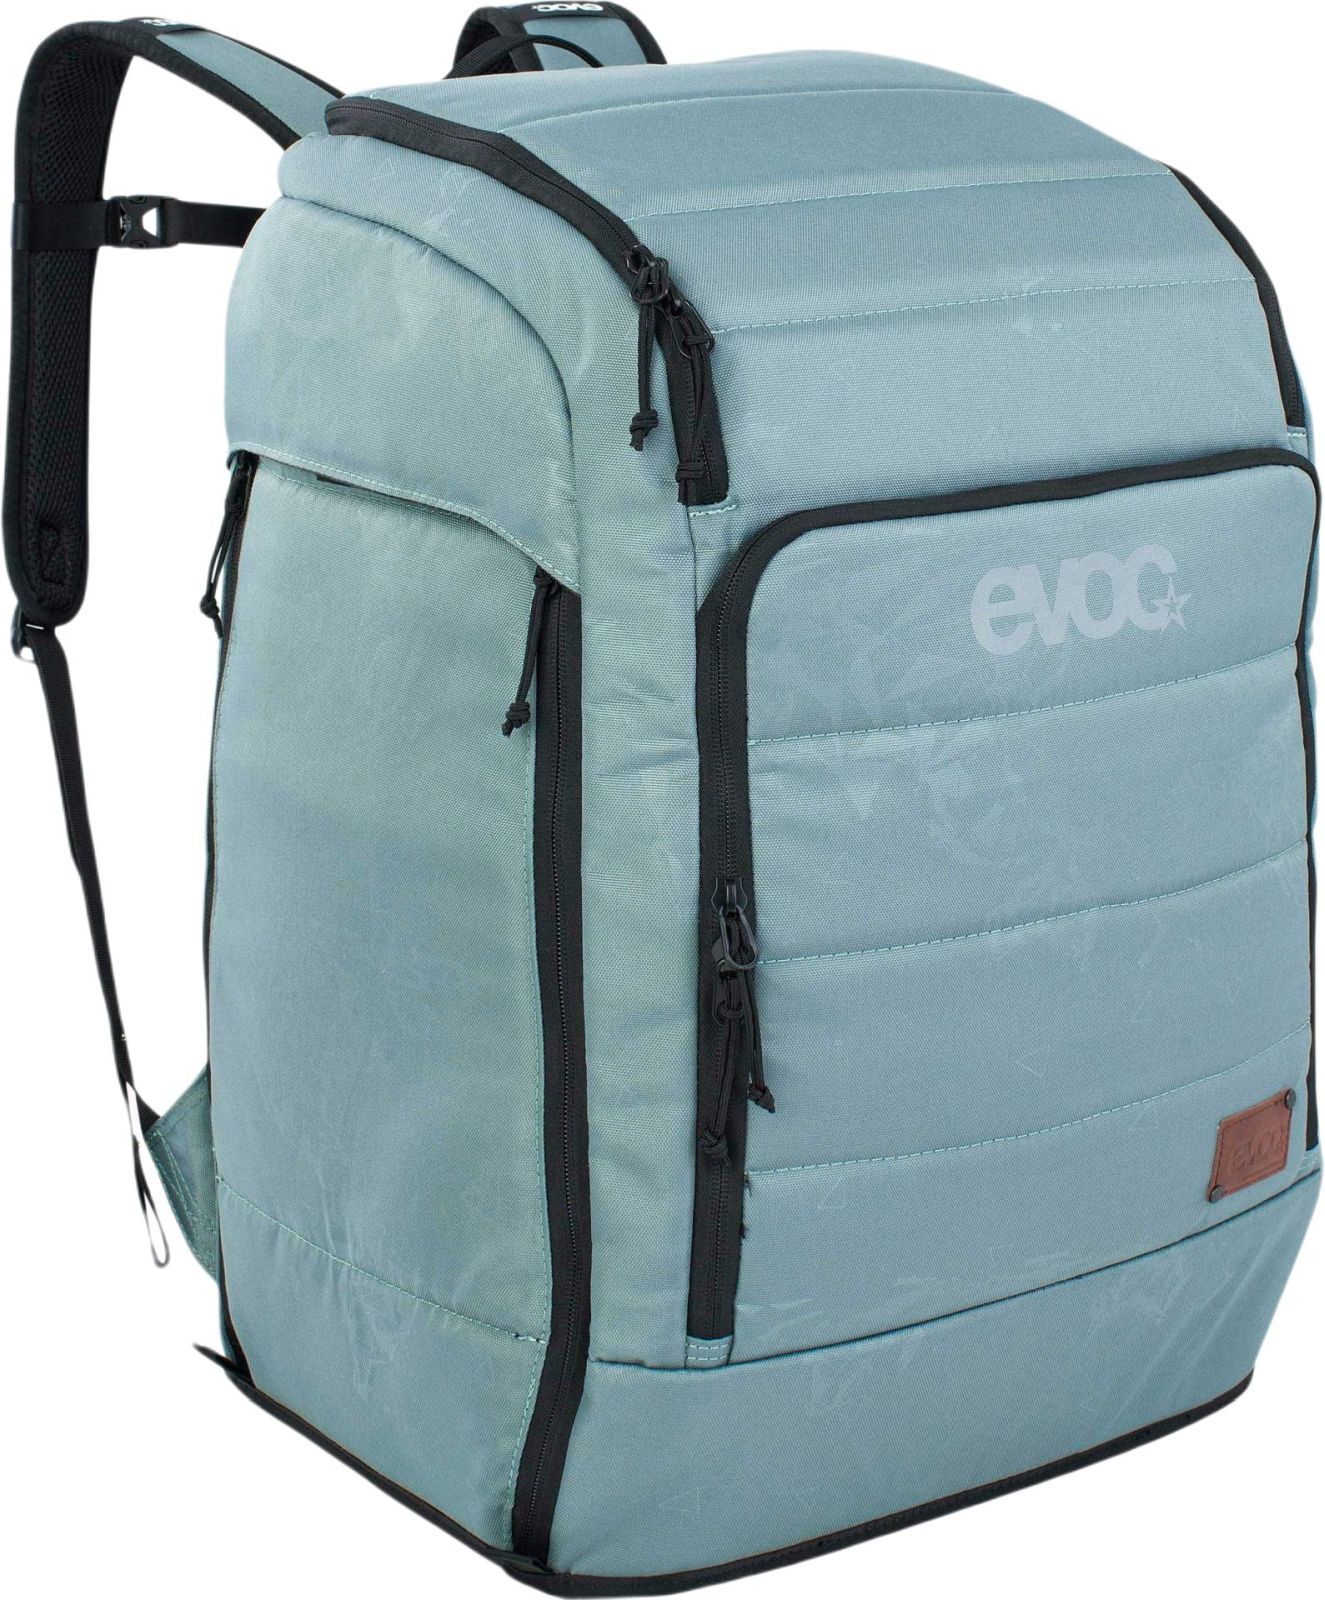 E-shop Evoc Gear Backpack 60 - steel uni